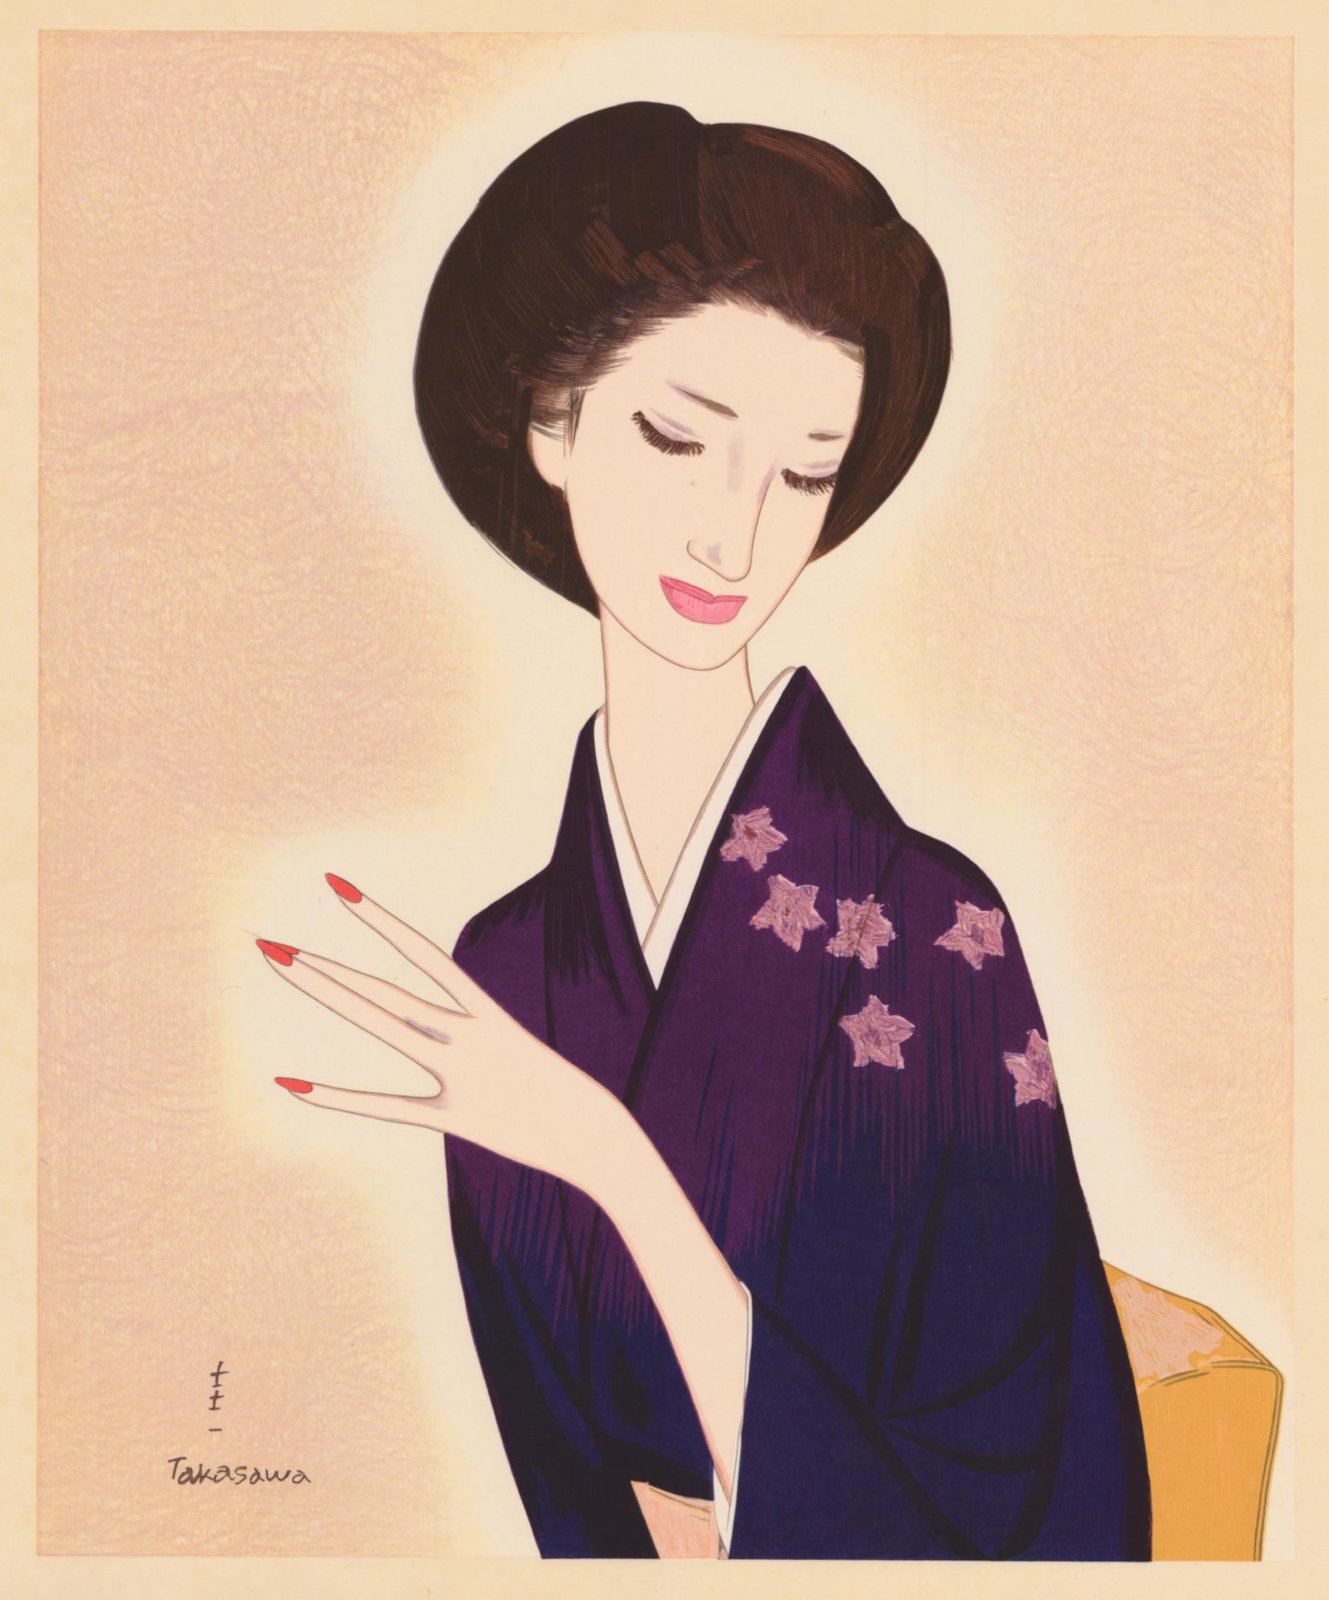 Takasawa Keiichi “Fingers” 1980 woodblock print